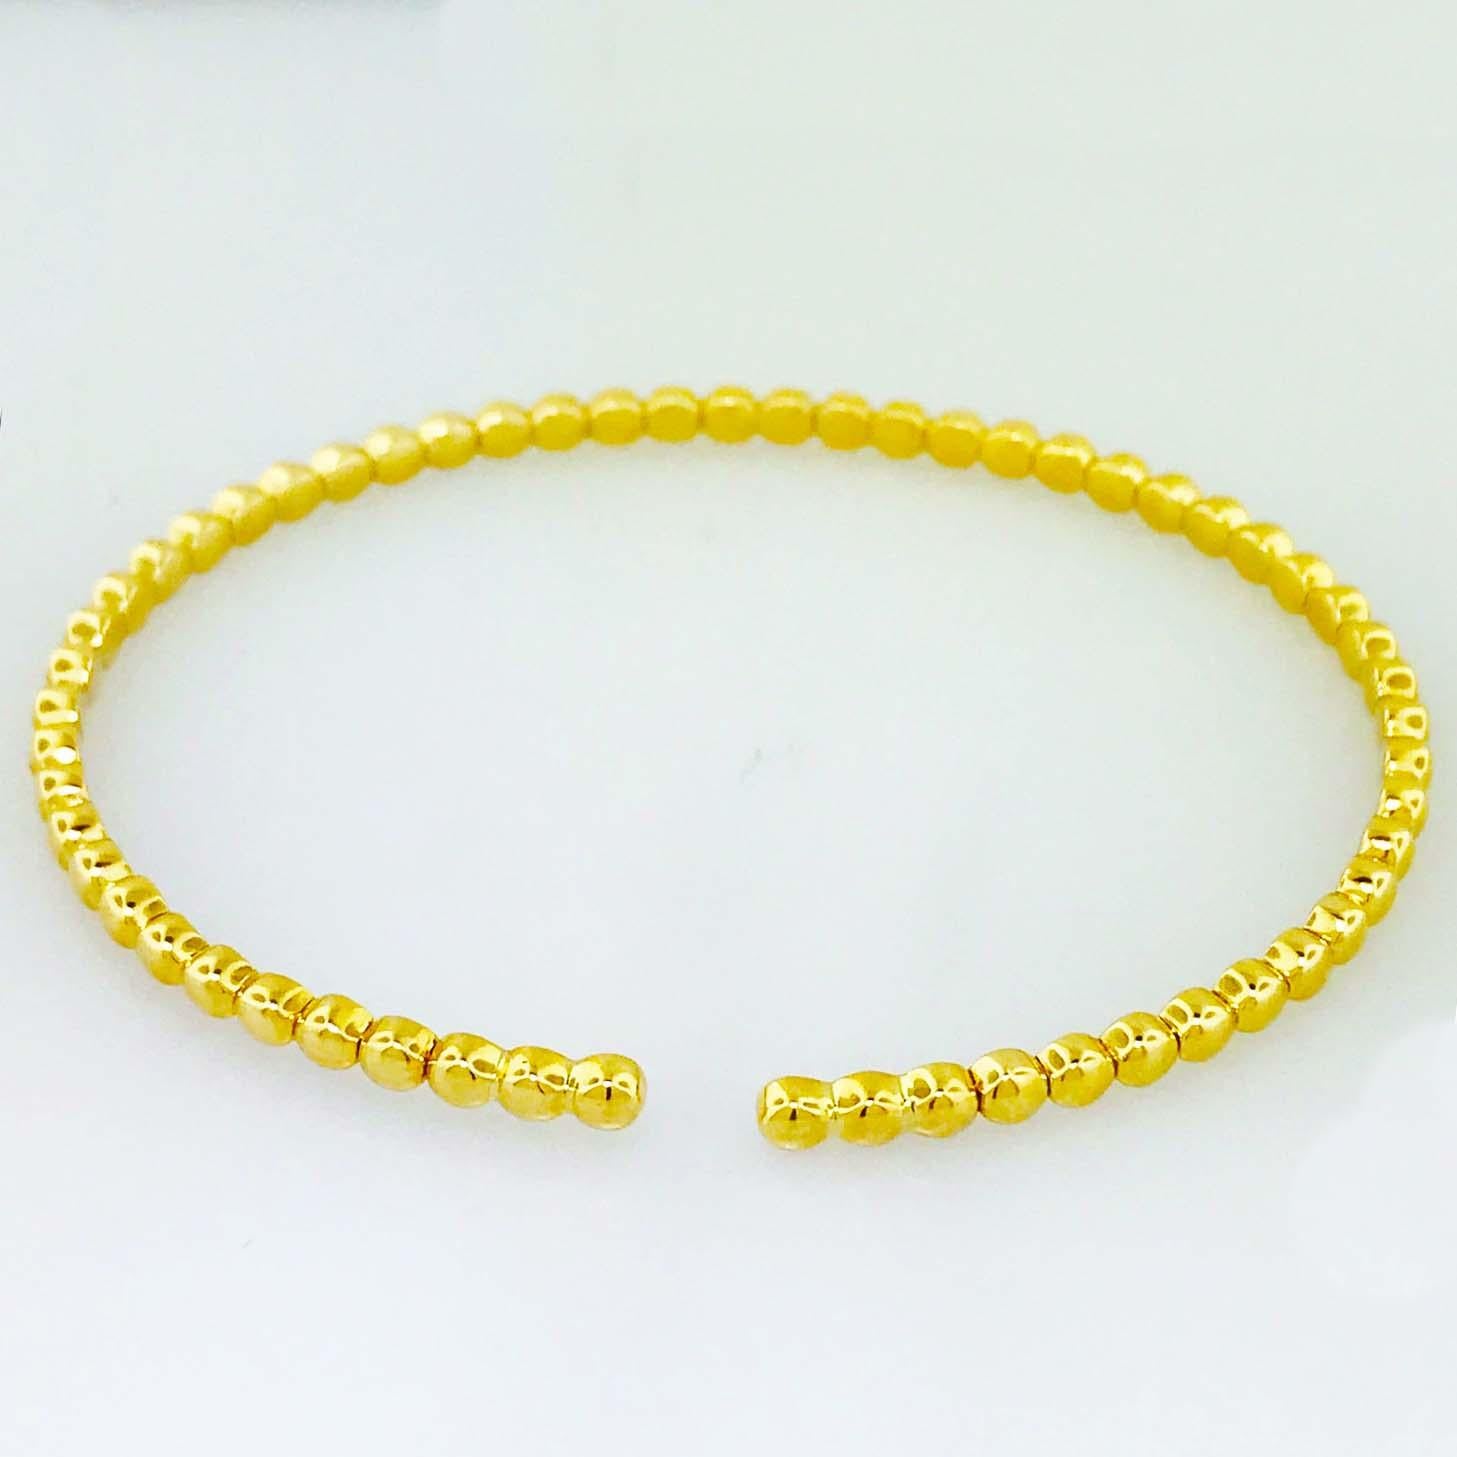 Artisan Designer 14 Karat Yellow Gold Flexible Bangle Bracelet, Collection Piece